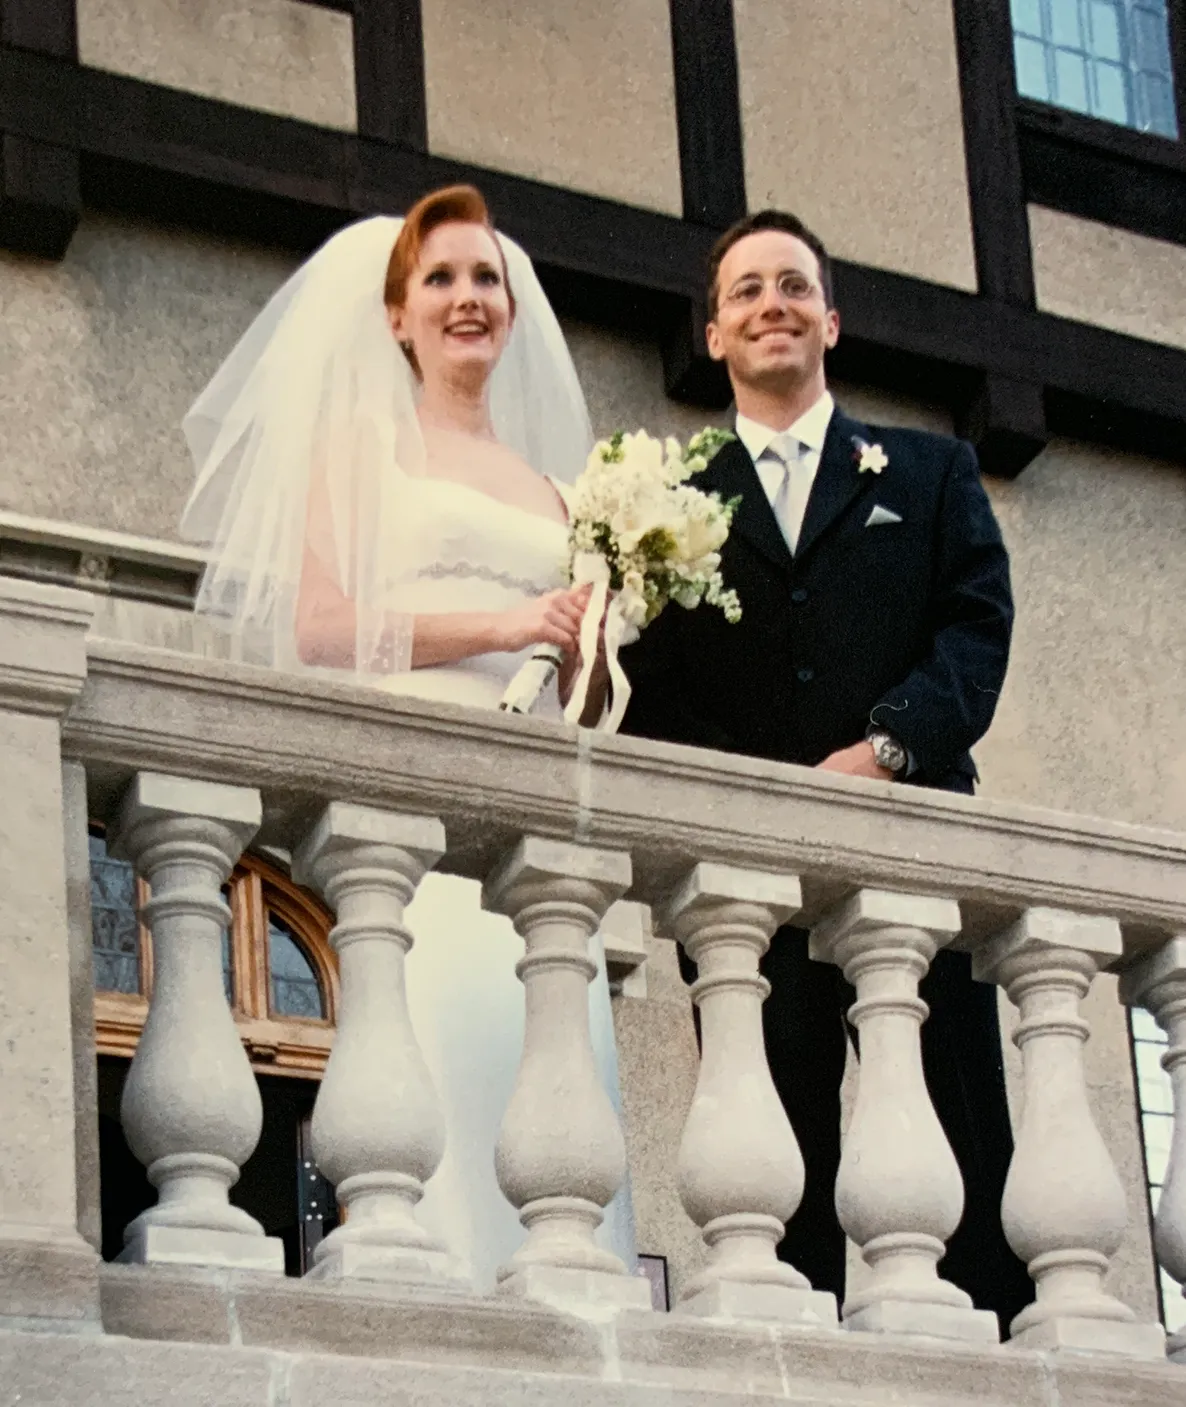 Matt Soper and Samantha Trautman Soper just married standing near railing of balcony